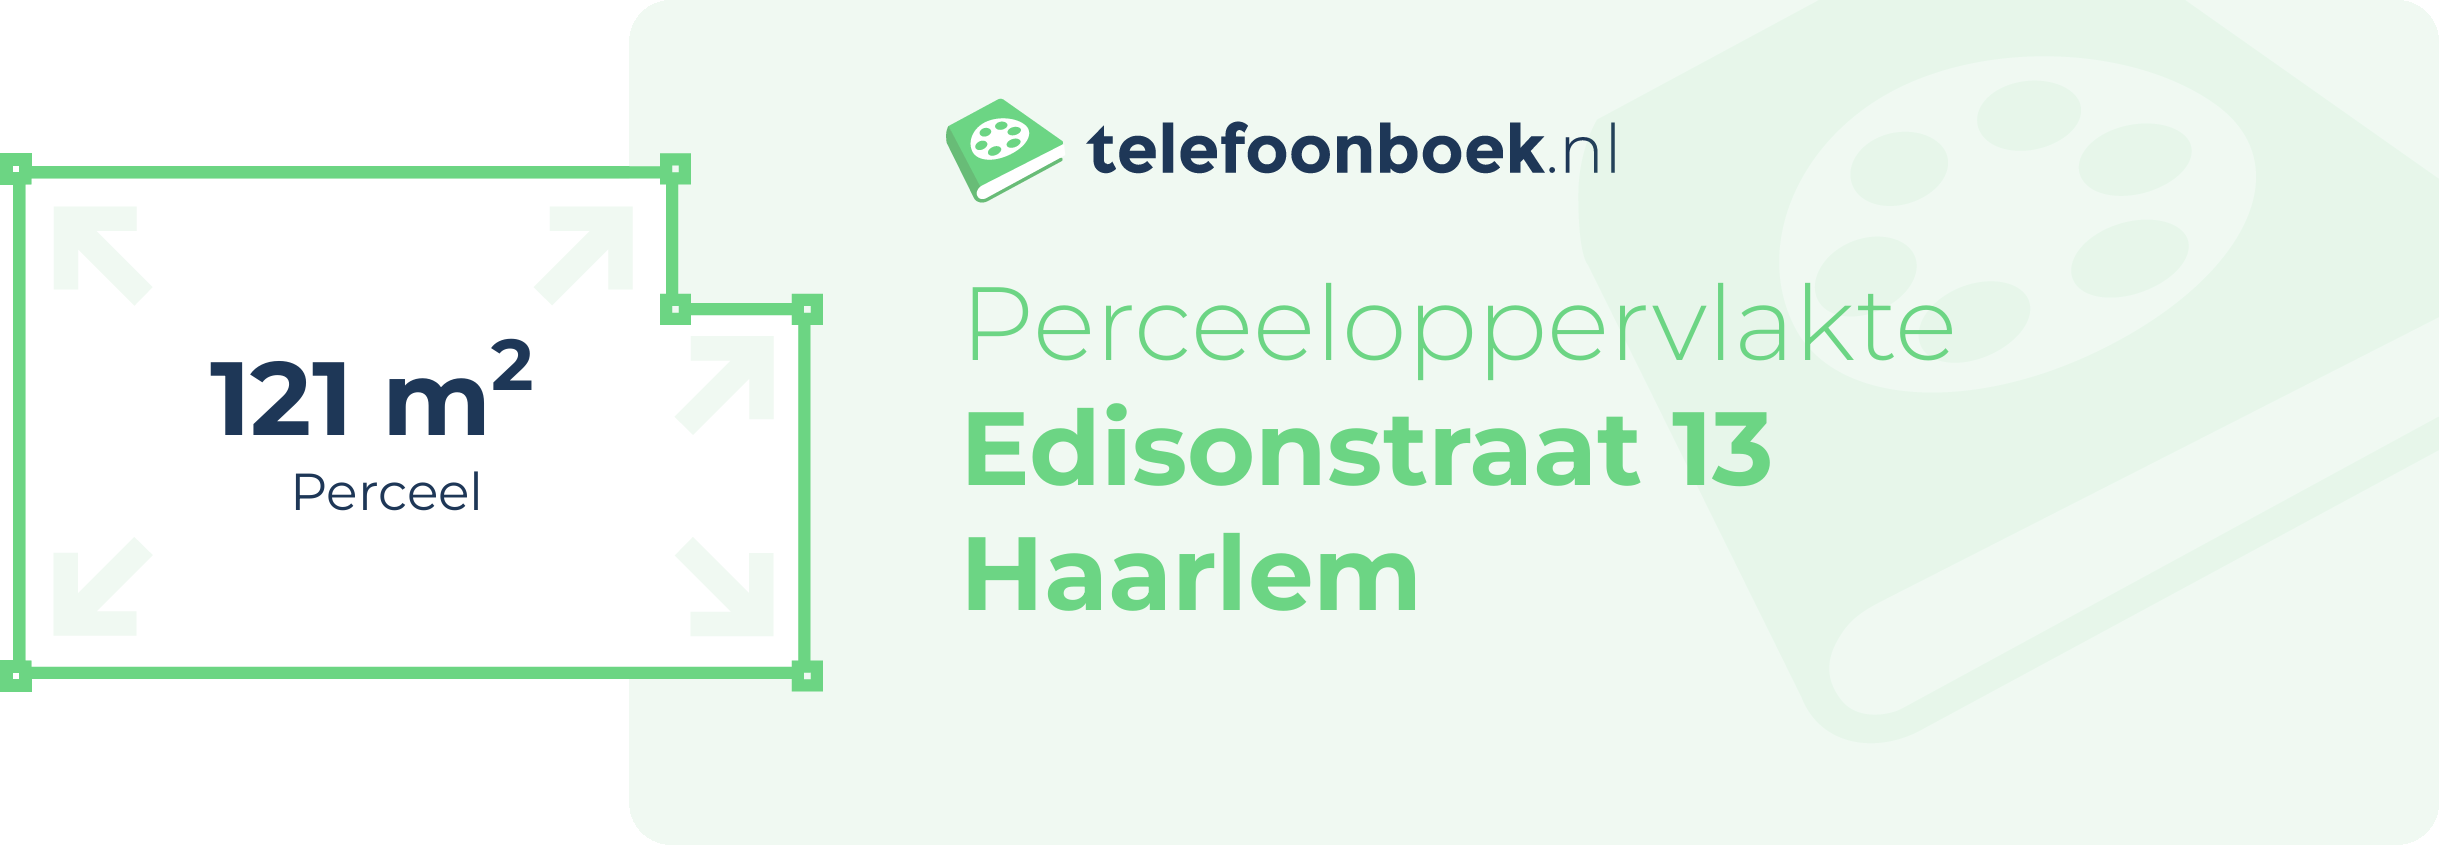 Perceeloppervlakte Edisonstraat 13 Haarlem